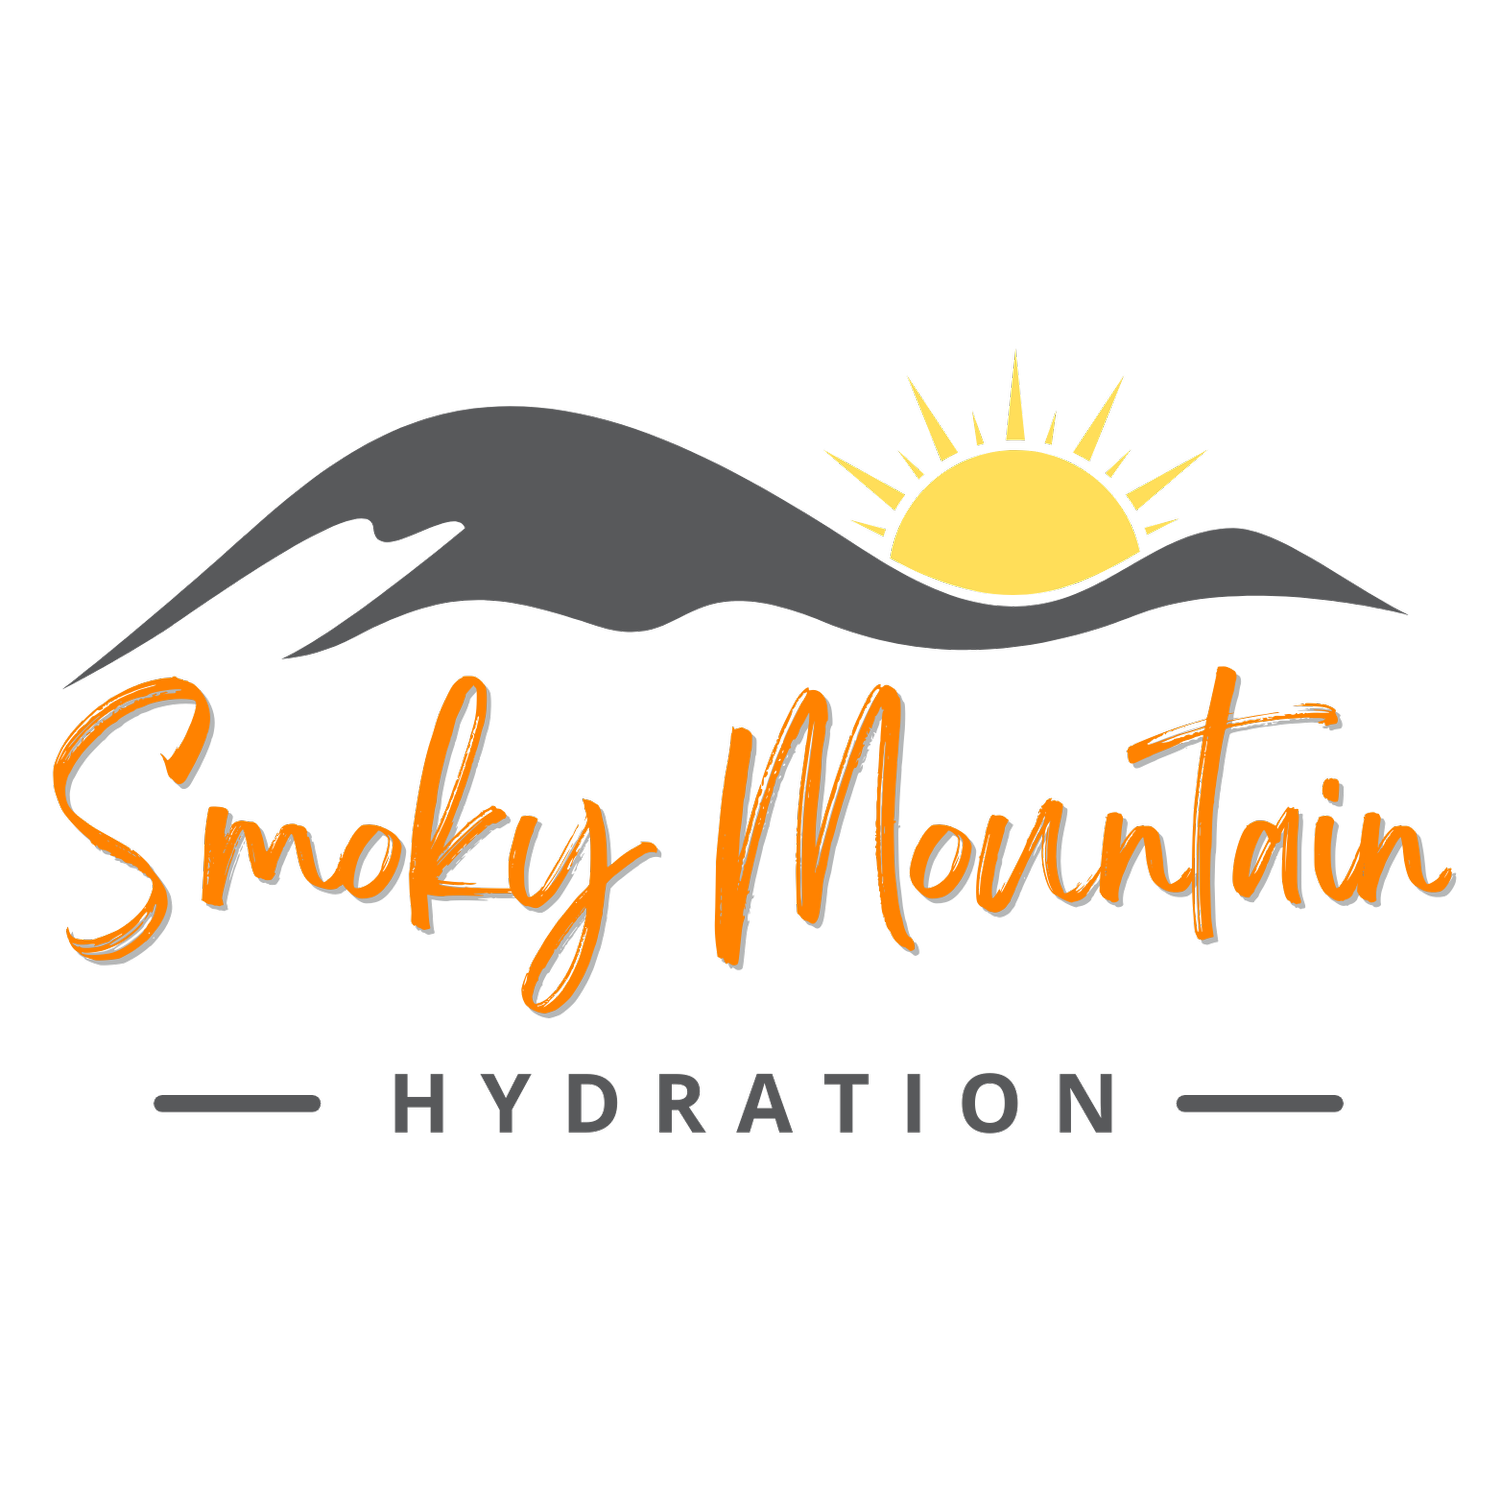 Smoky Mountain Hydration